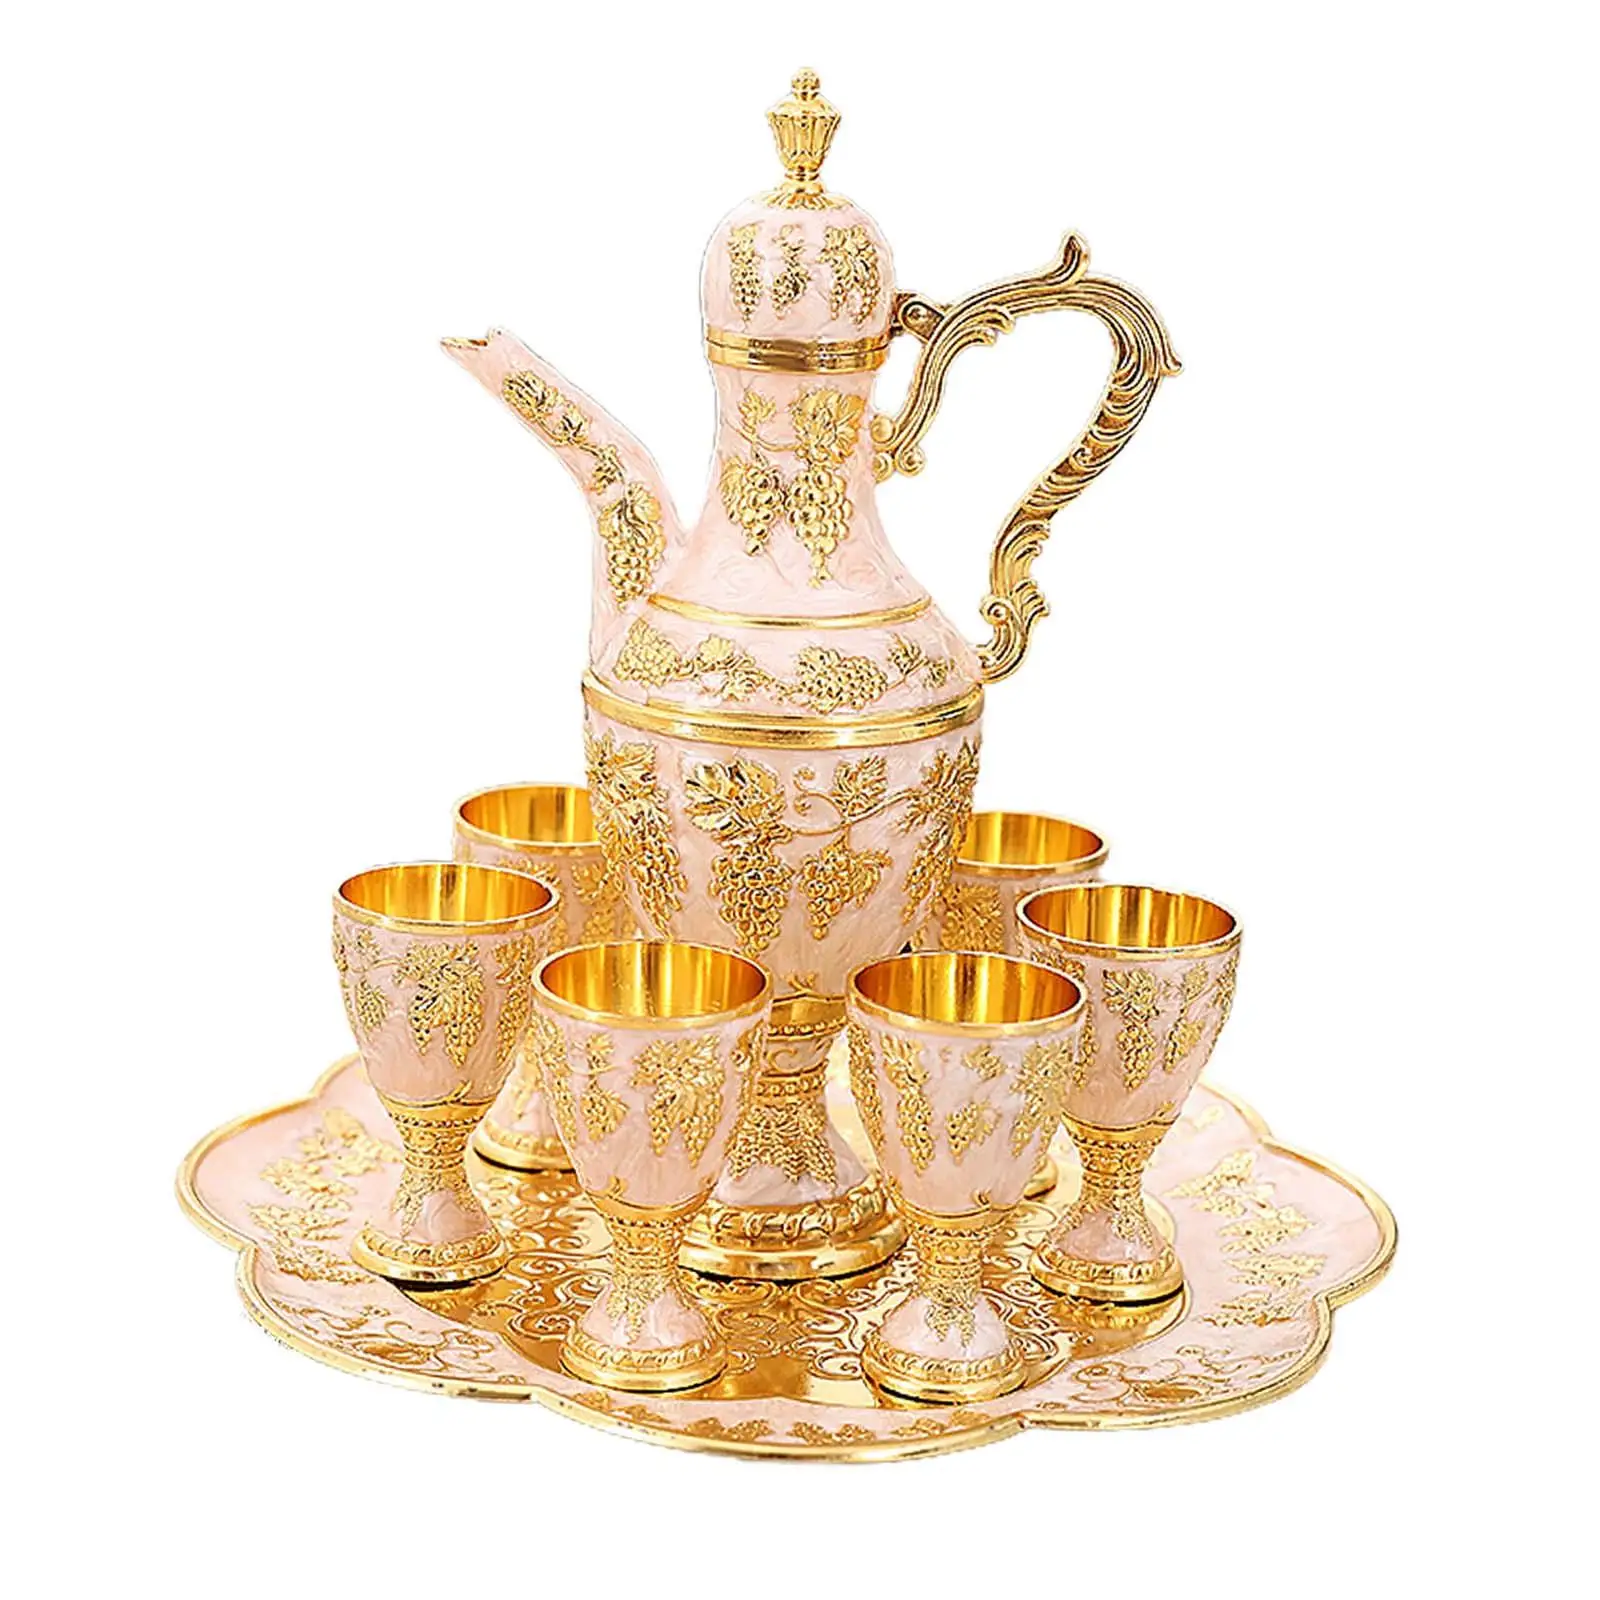 European Set Vintage Teapot Set Drinkware Home Decor Metal Glass Jug Set turkish Teapot Set for hotel festival